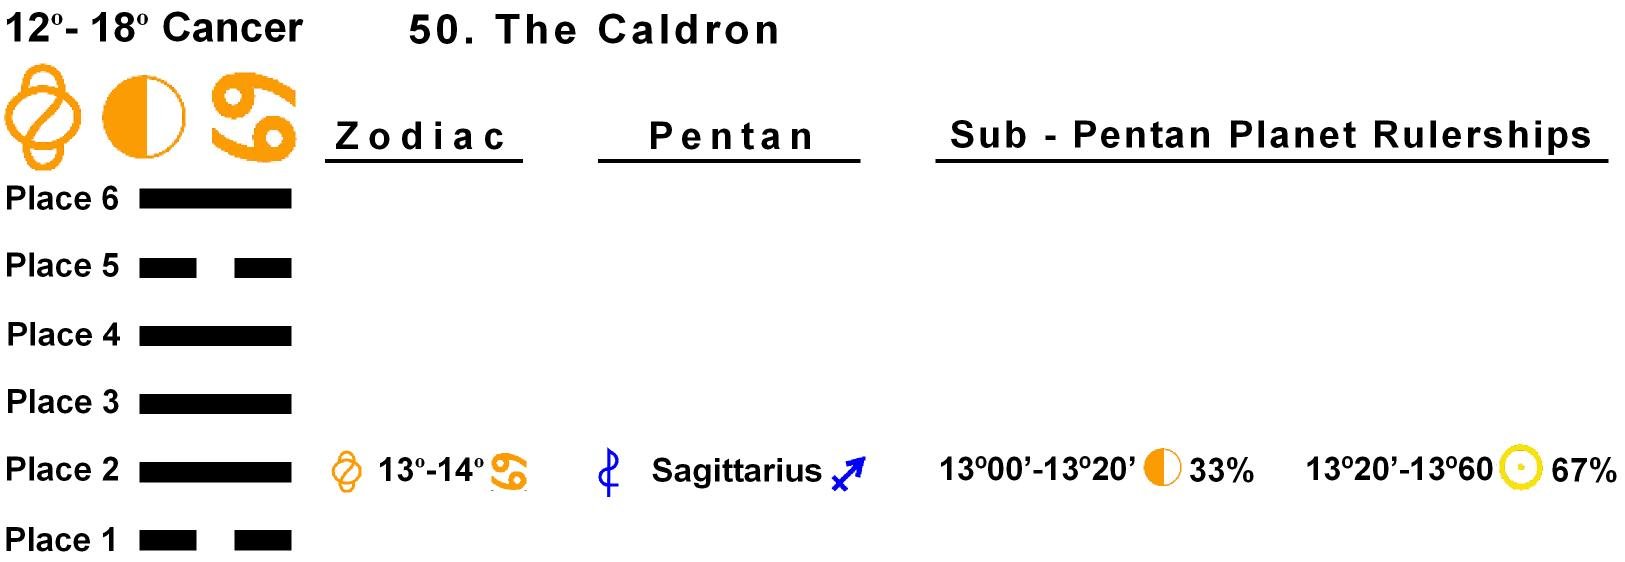 Pent-lines-04CA 13-14 Hx-50 The Caldron